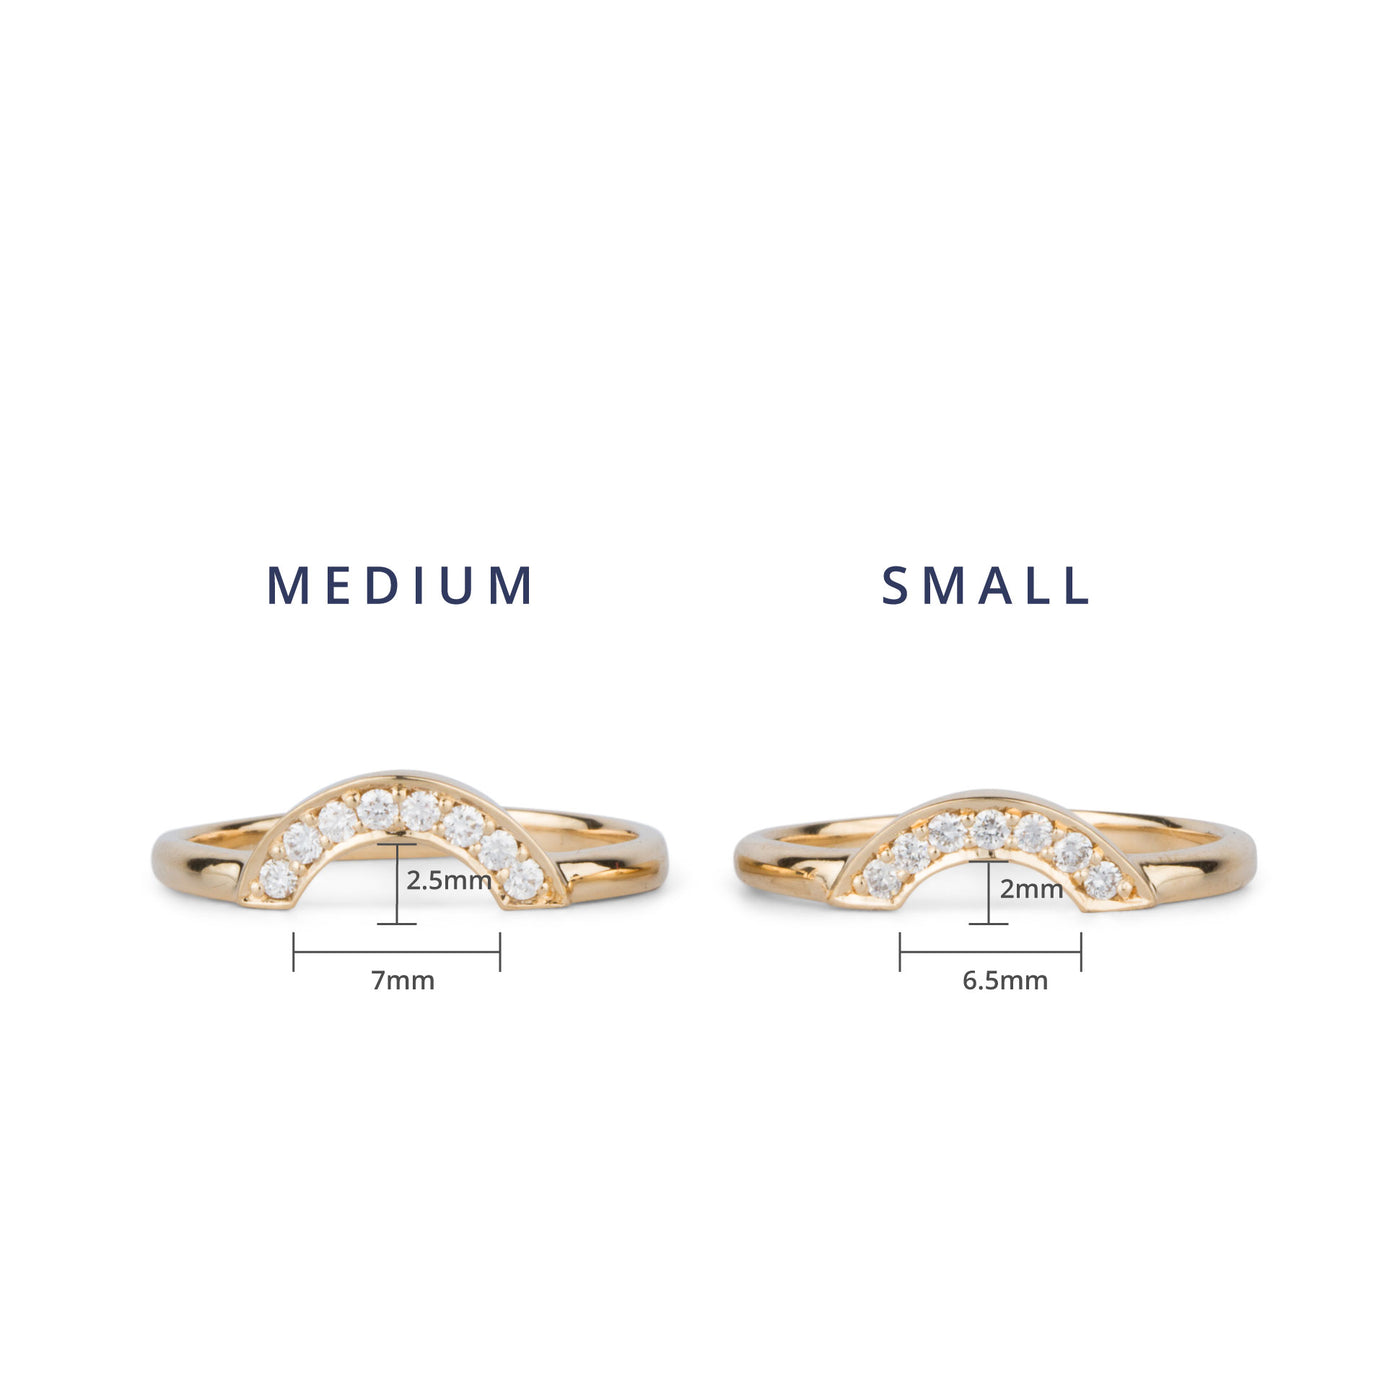 Pave arch band medium vs small dimensions